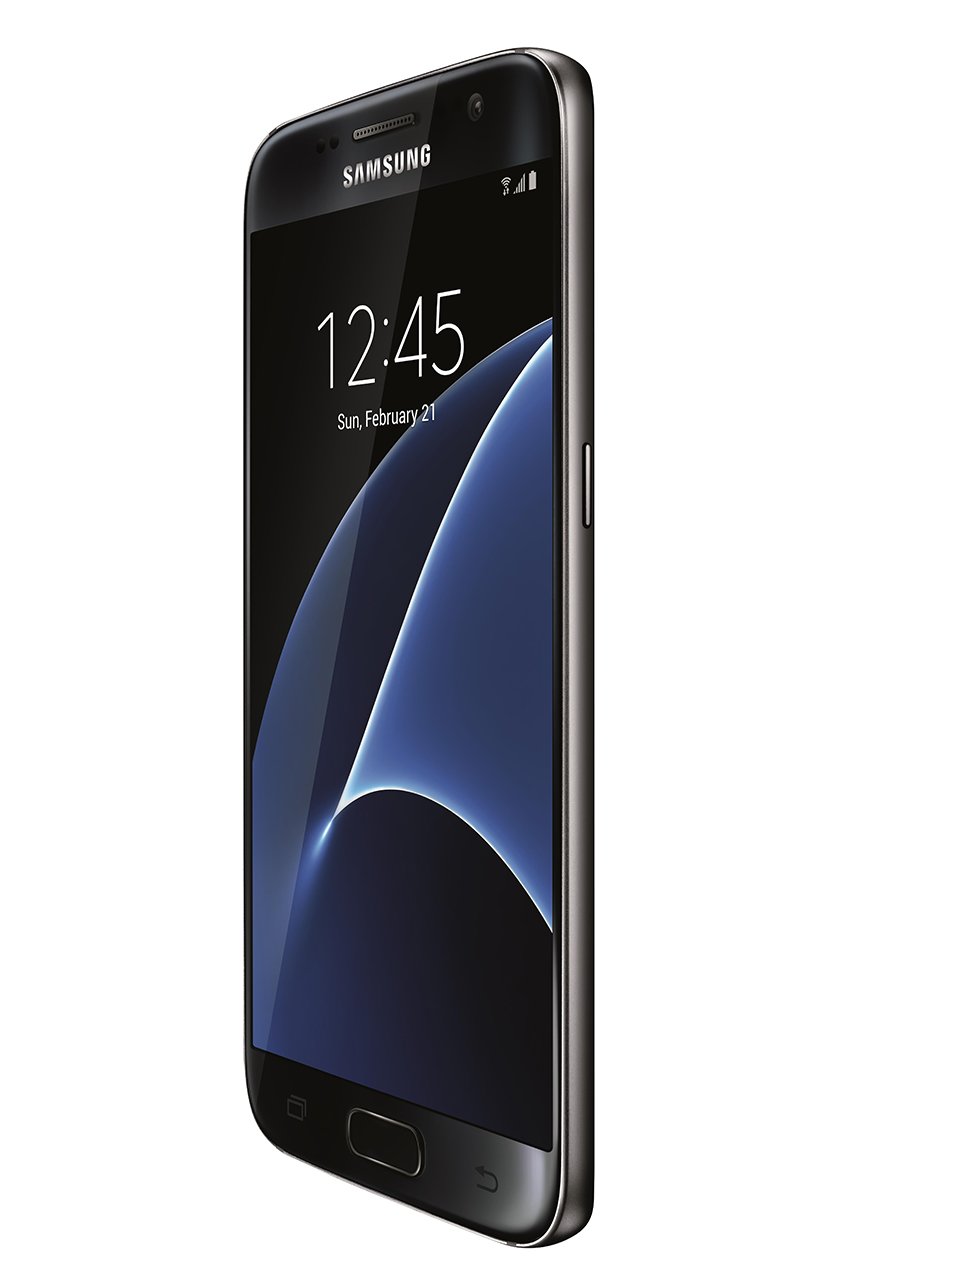 Samsung Galaxy S7 & S7 Edge